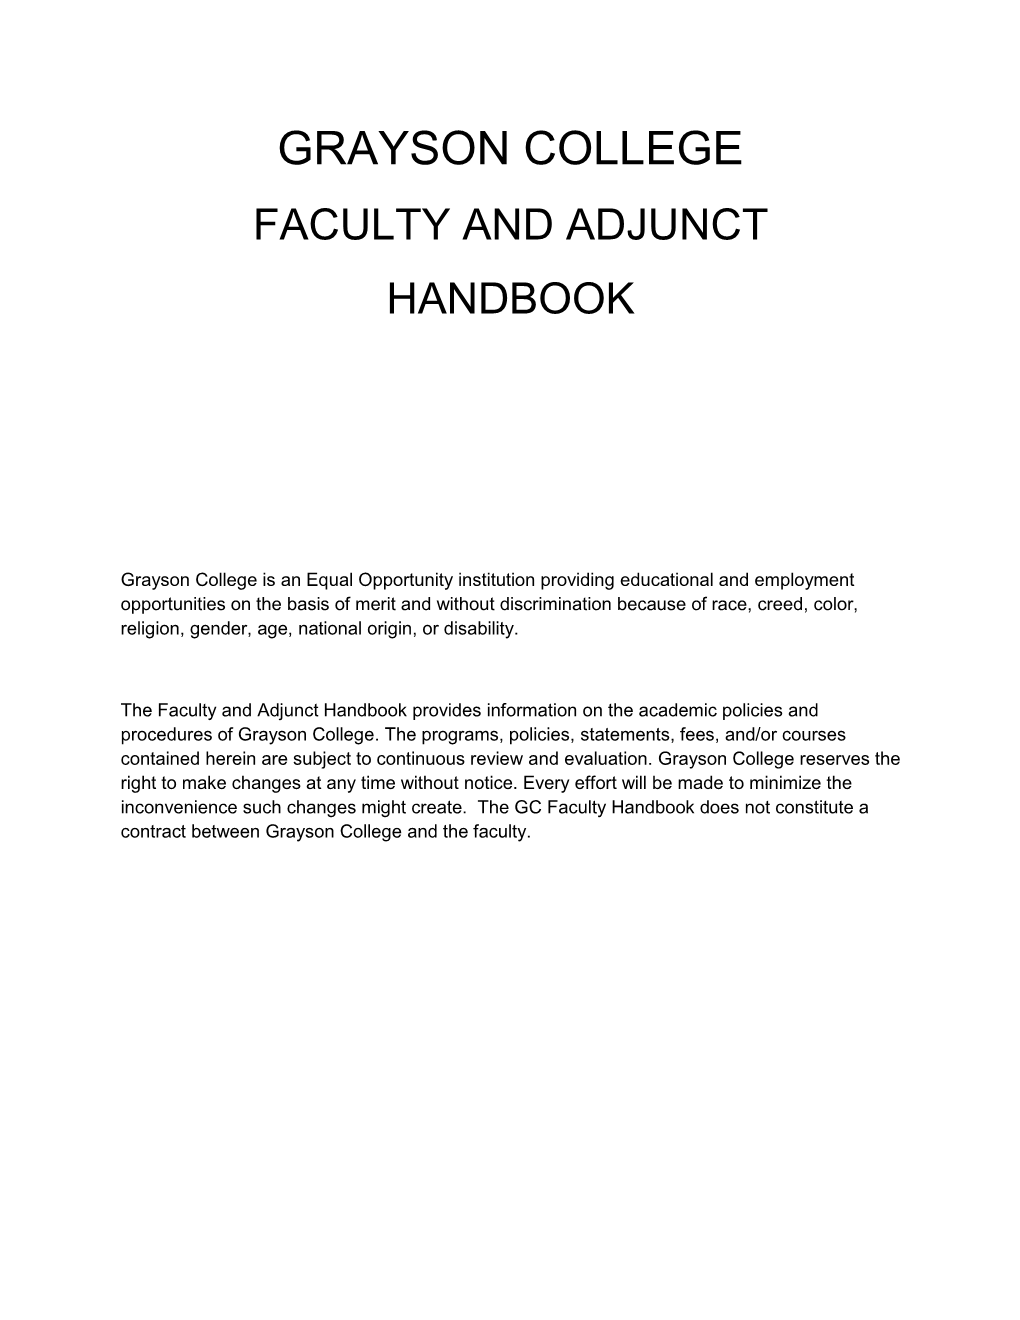 Grayson College Faculty and Adjunct Handbook